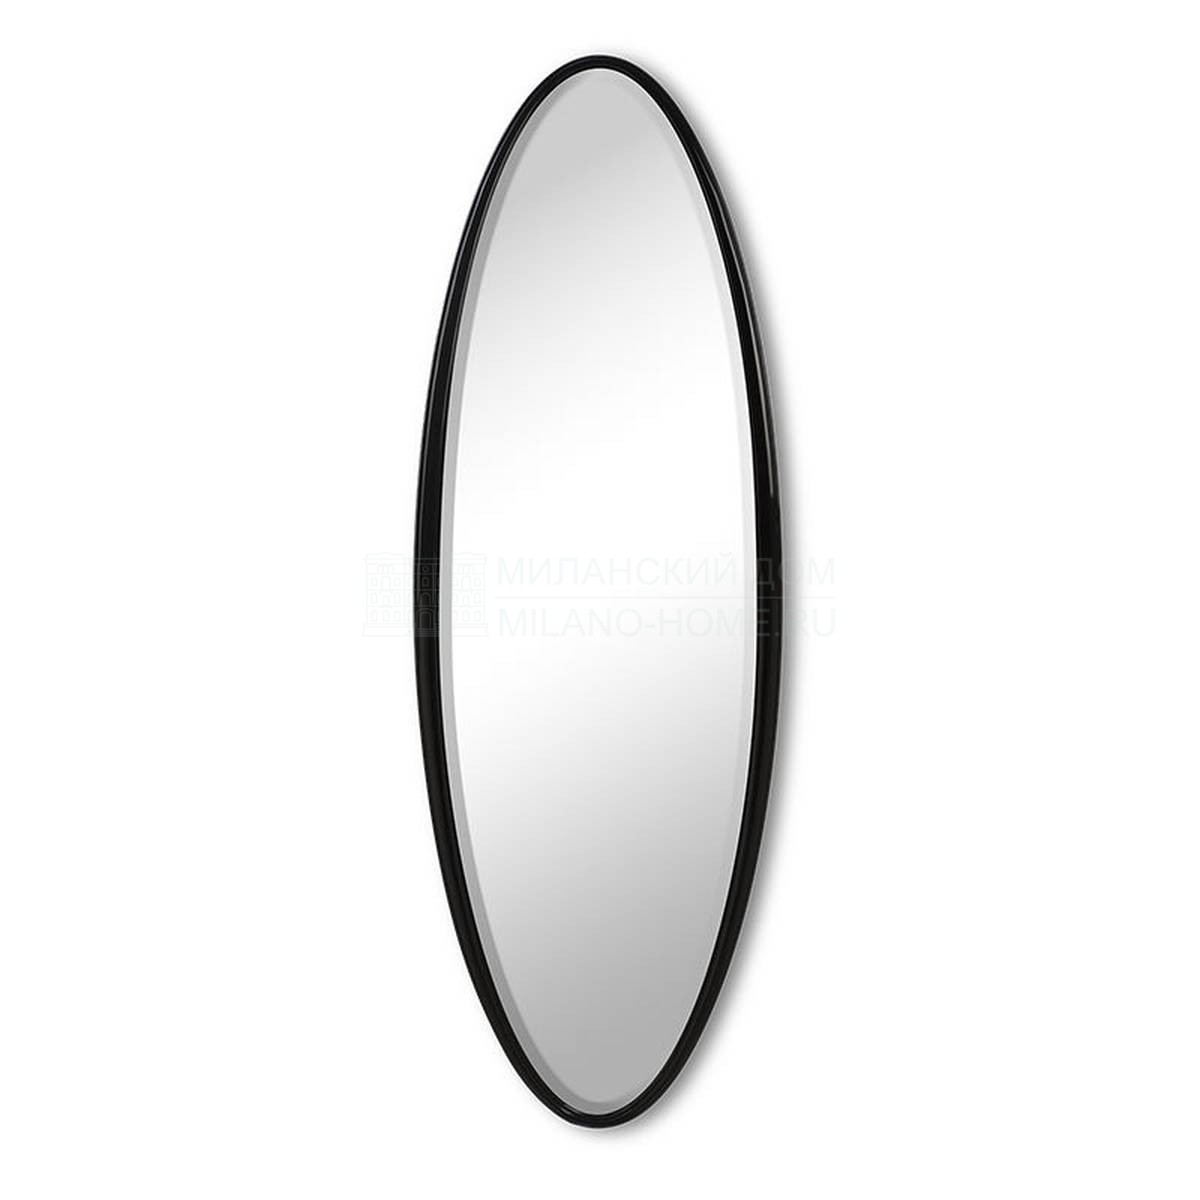 Зеркало настенное L Ovale / art.50-2945 из США фабрики 